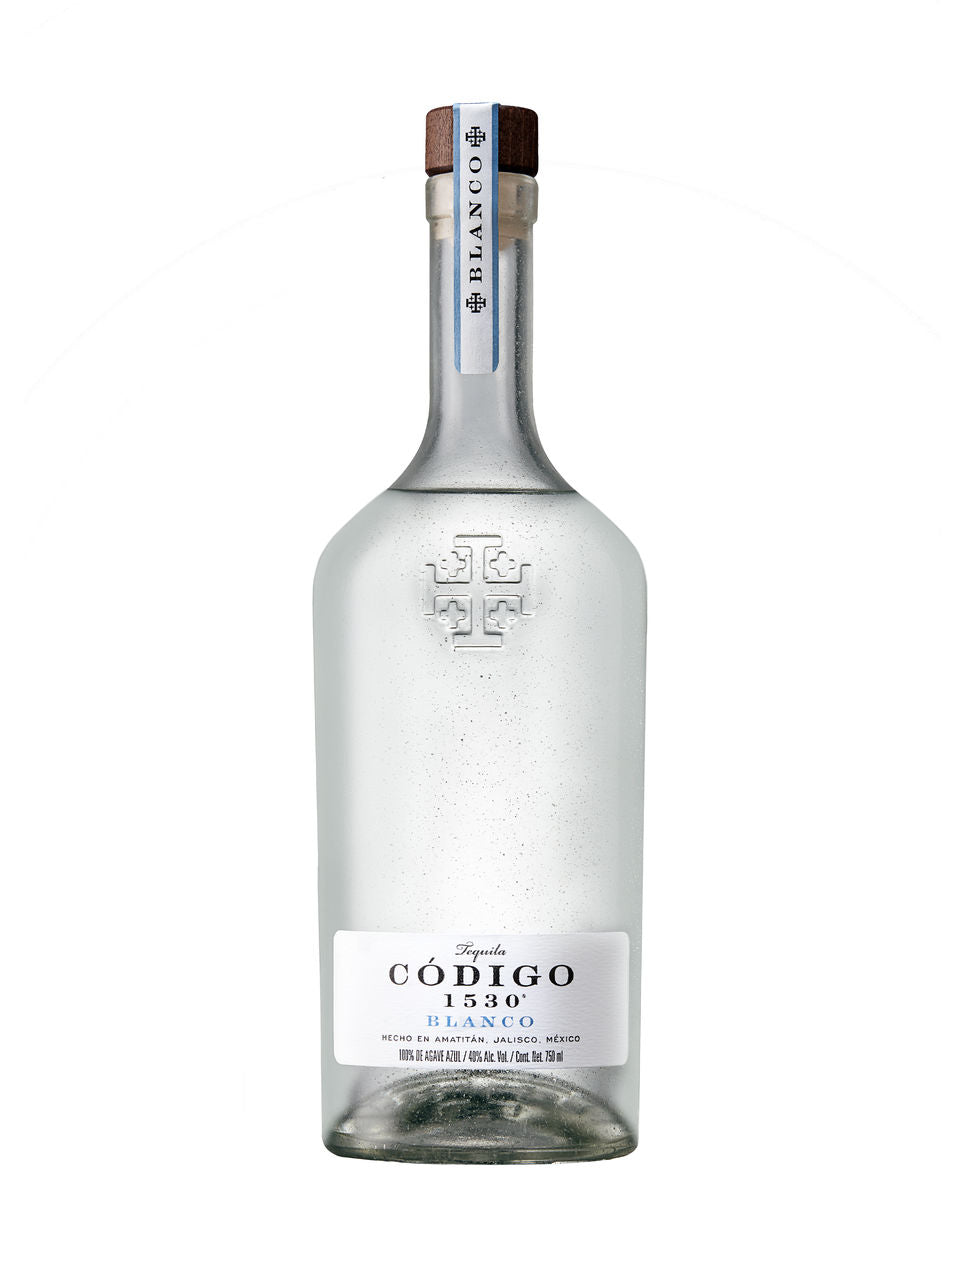 Codigo 1530 Blanco Tequila 750 ml bottle